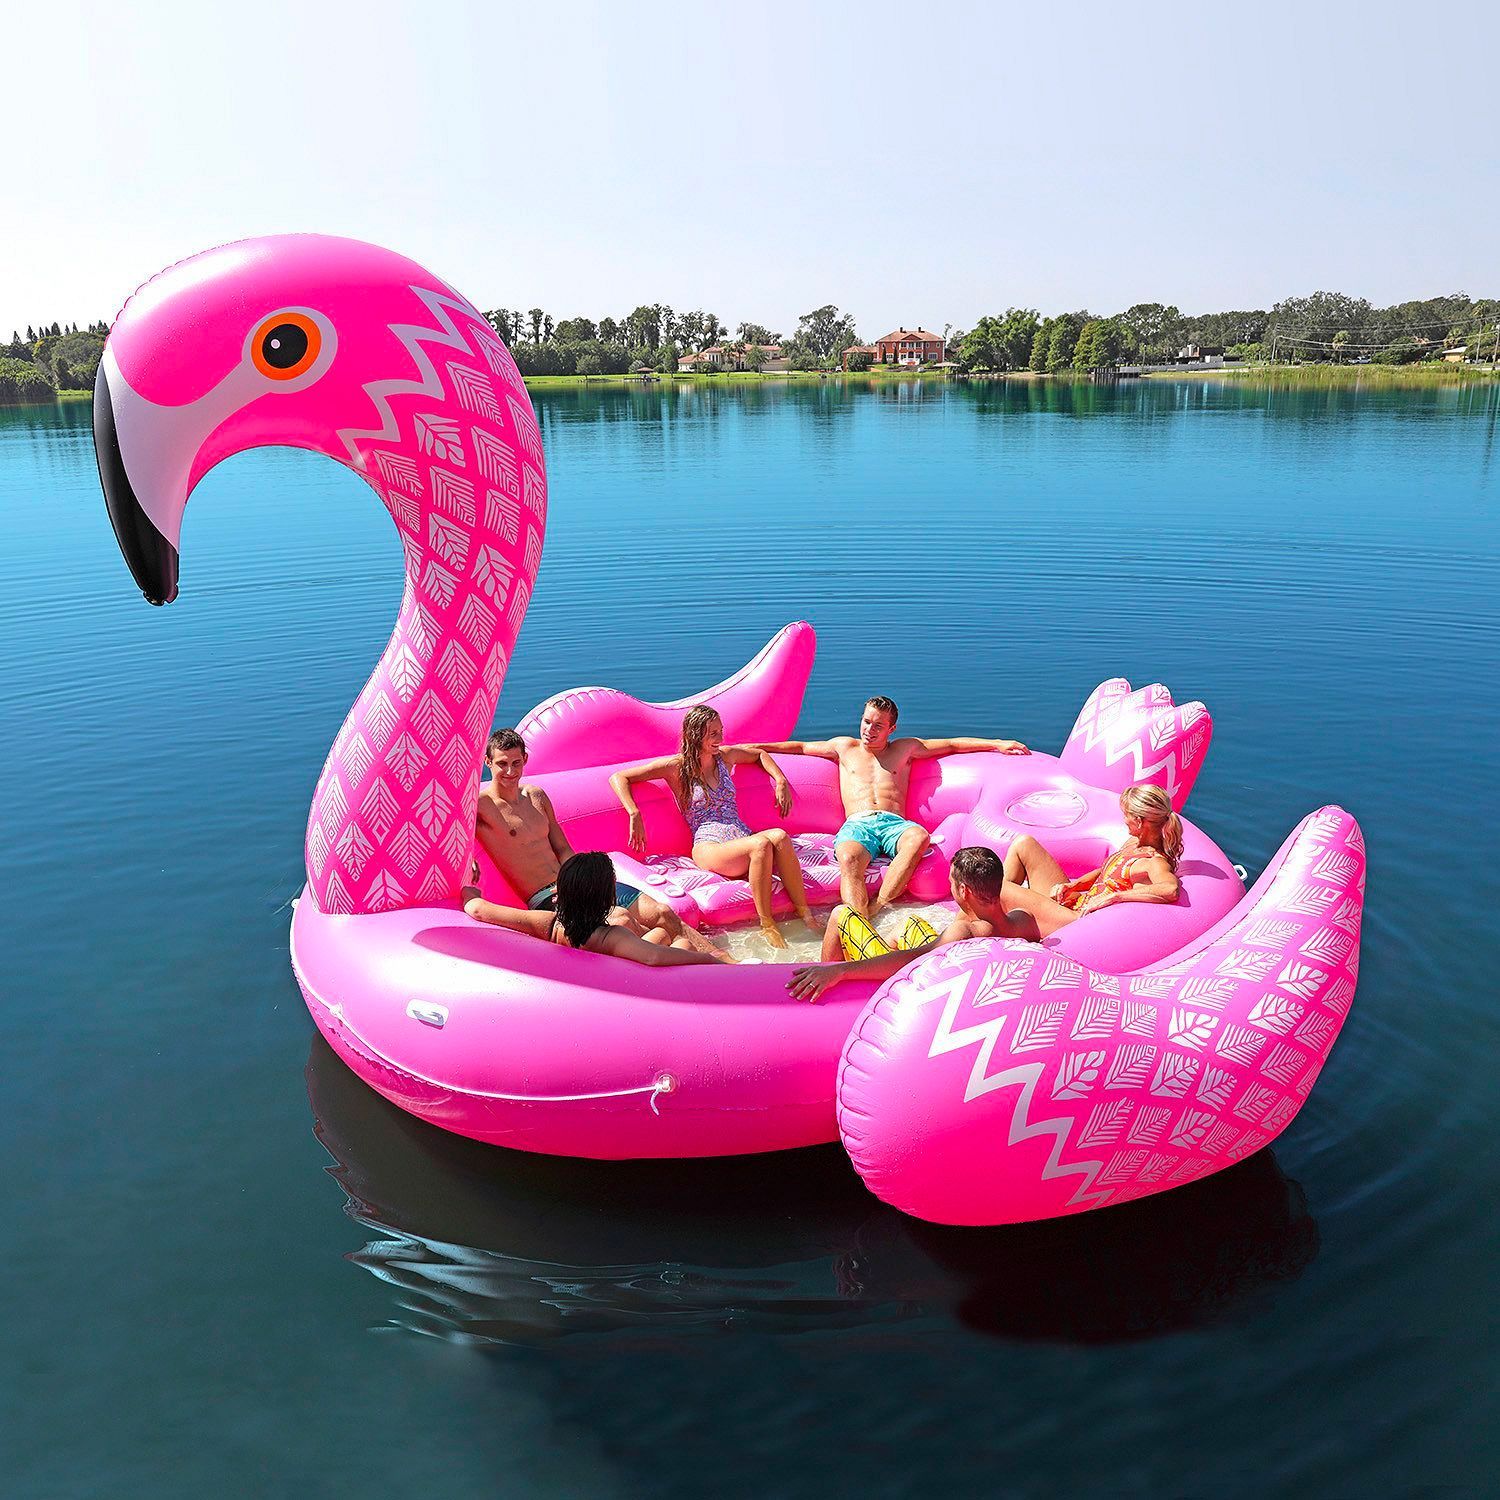 1520958454 Flamingo Pool Float 6 Person 1520958430 ?crop=1xw 1xh;center,top